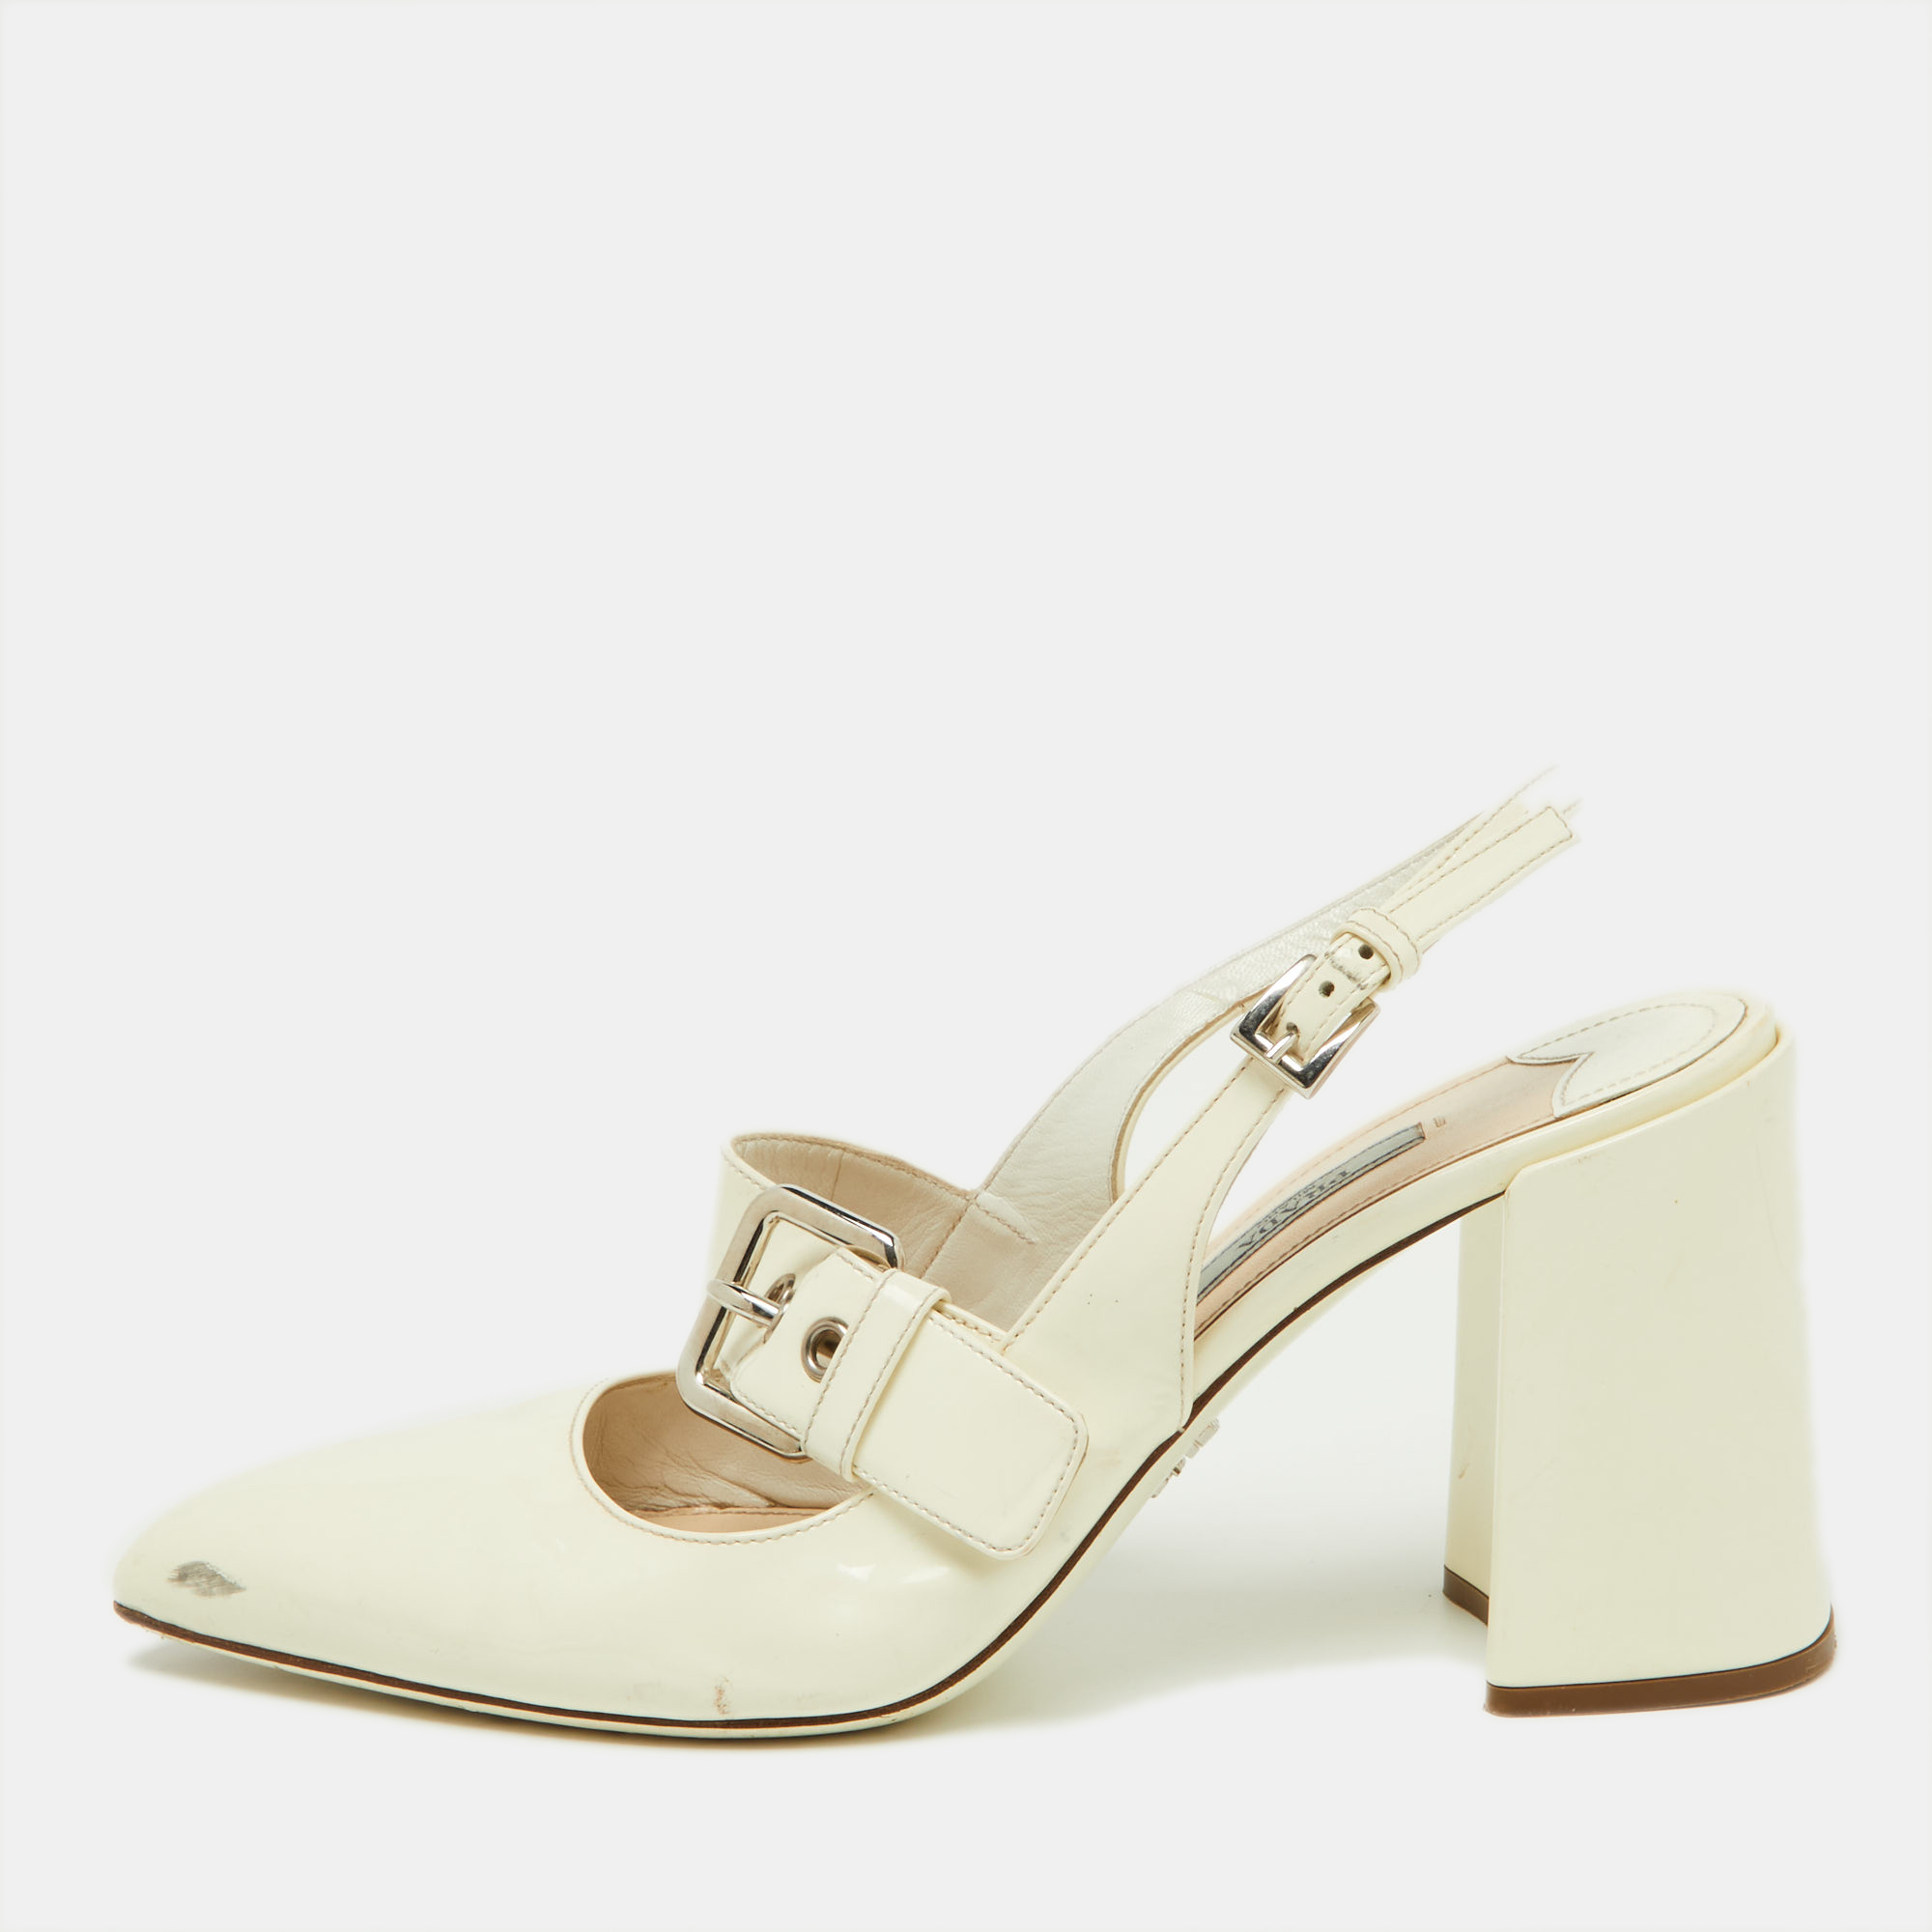 Prada off white patent leather mary jane slingback block heel pumps size 39